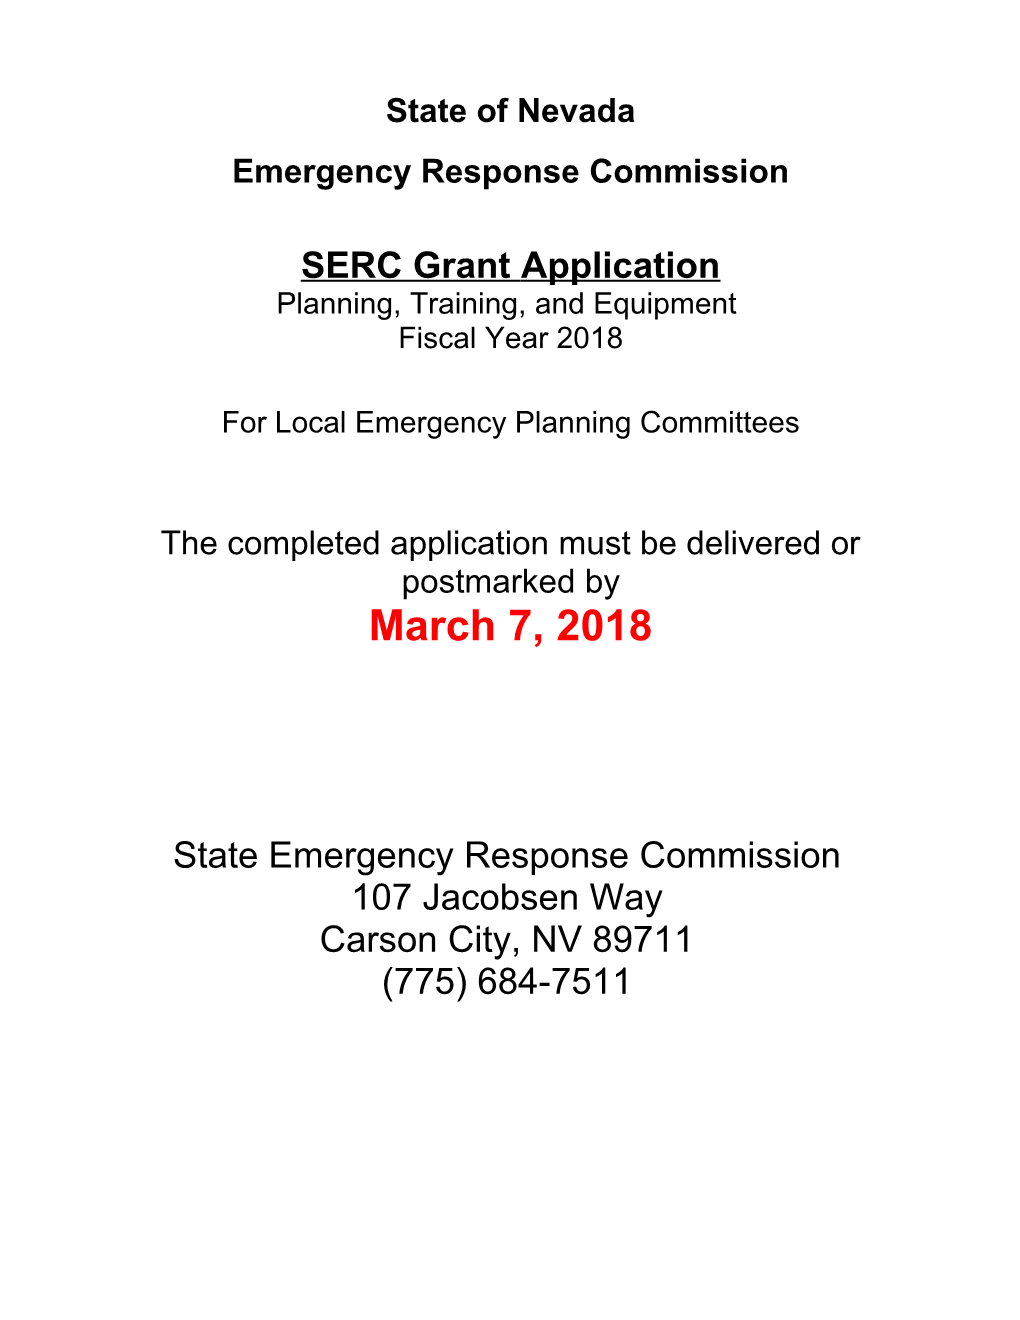 Emergency Response Commission